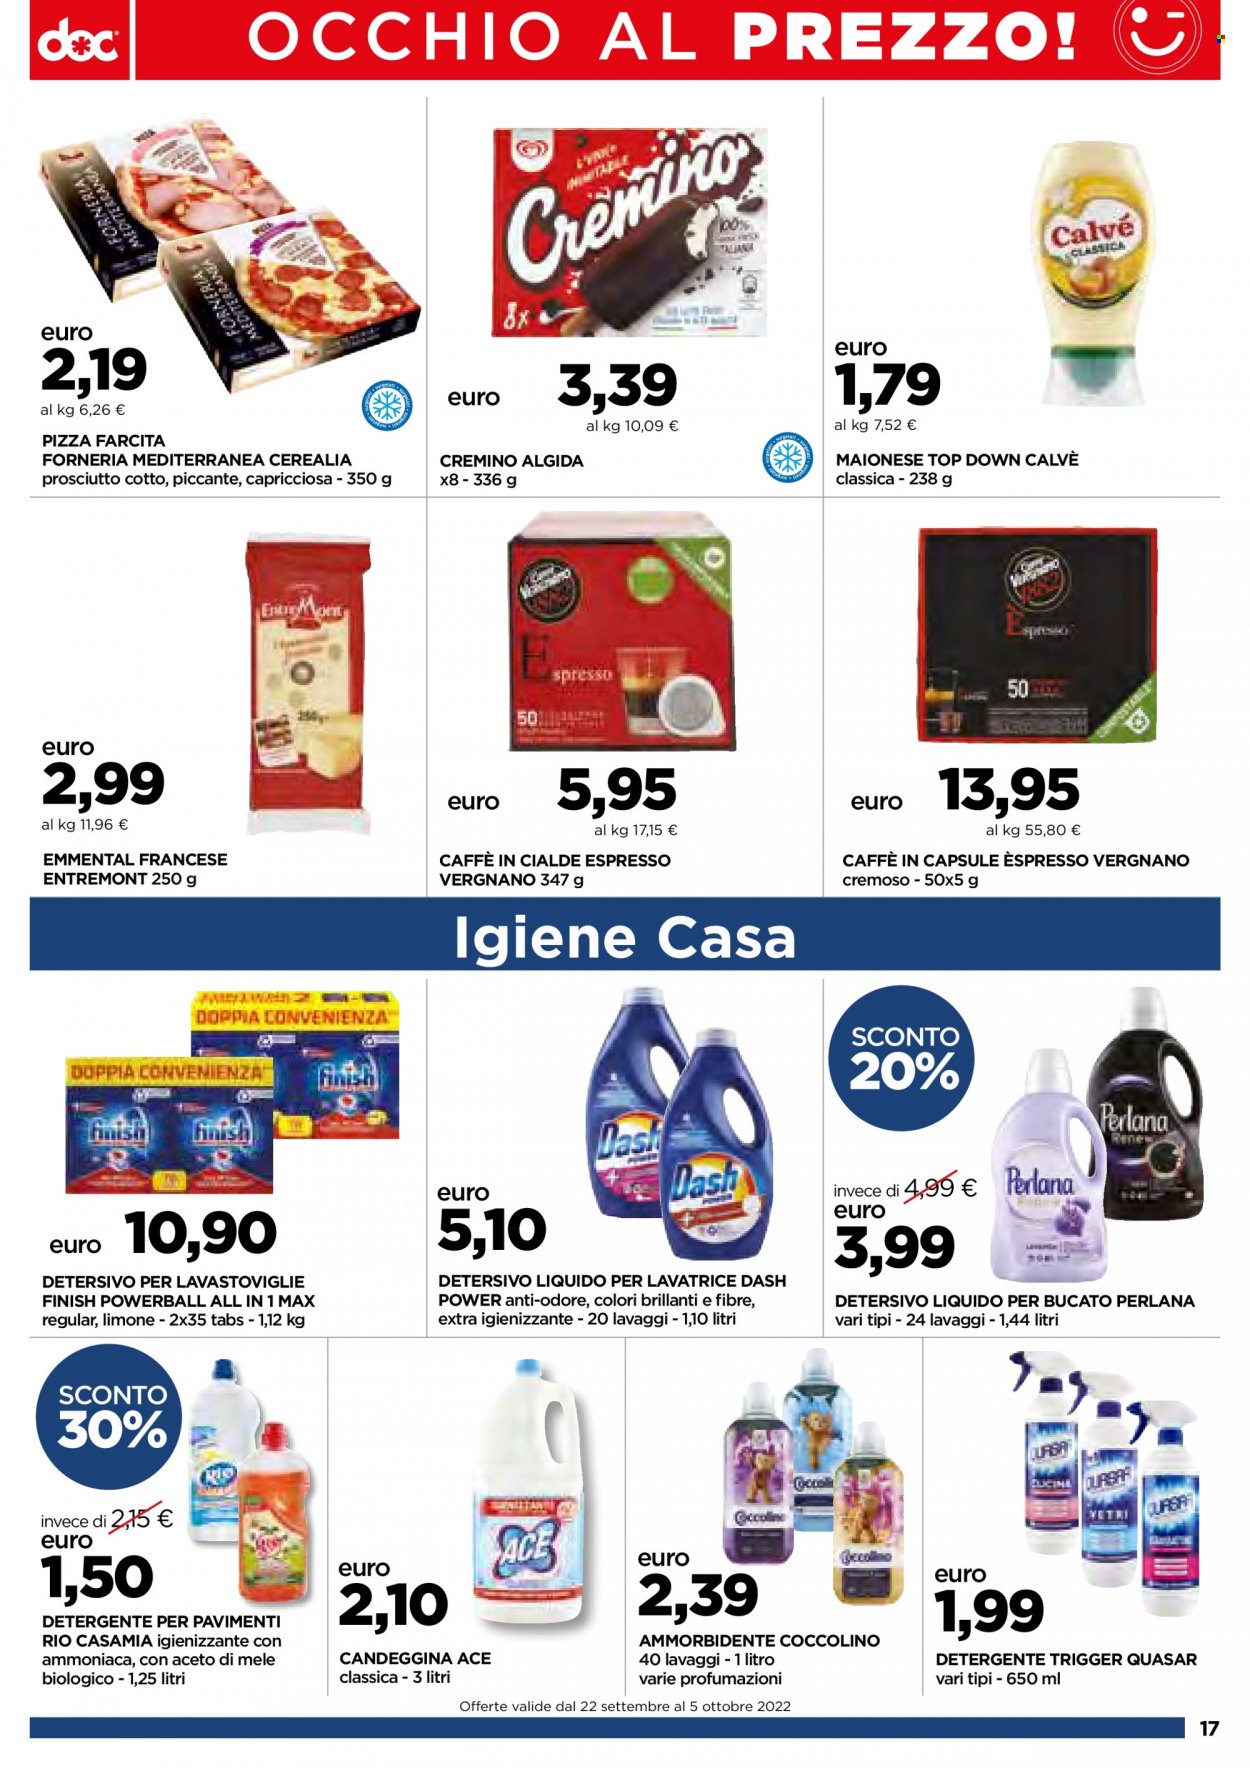 Volantino doc supermercati - 22.9.2022 - 5.10.2022.